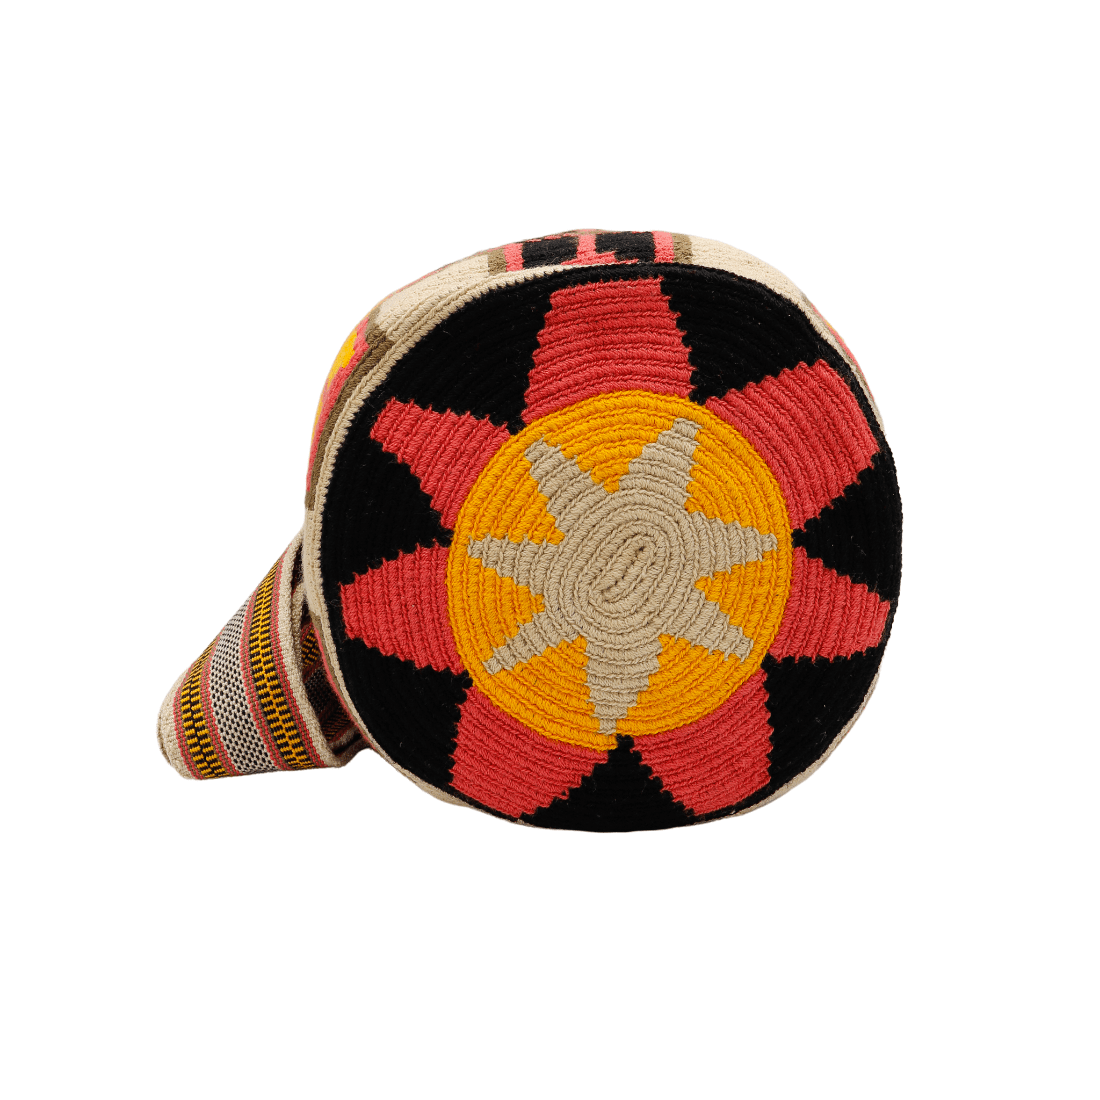 Wayuu bags, Wayuu mochila bags, Authentic Wayuu bags, Handmade Wayuu bags, Colombian Wayuu bags, Wayuu crochet bags, Wayuu tribal bags, Unique Wayuu bags, Wayuu artisan bags, Colorful Wayuu bags | Origin Colombia